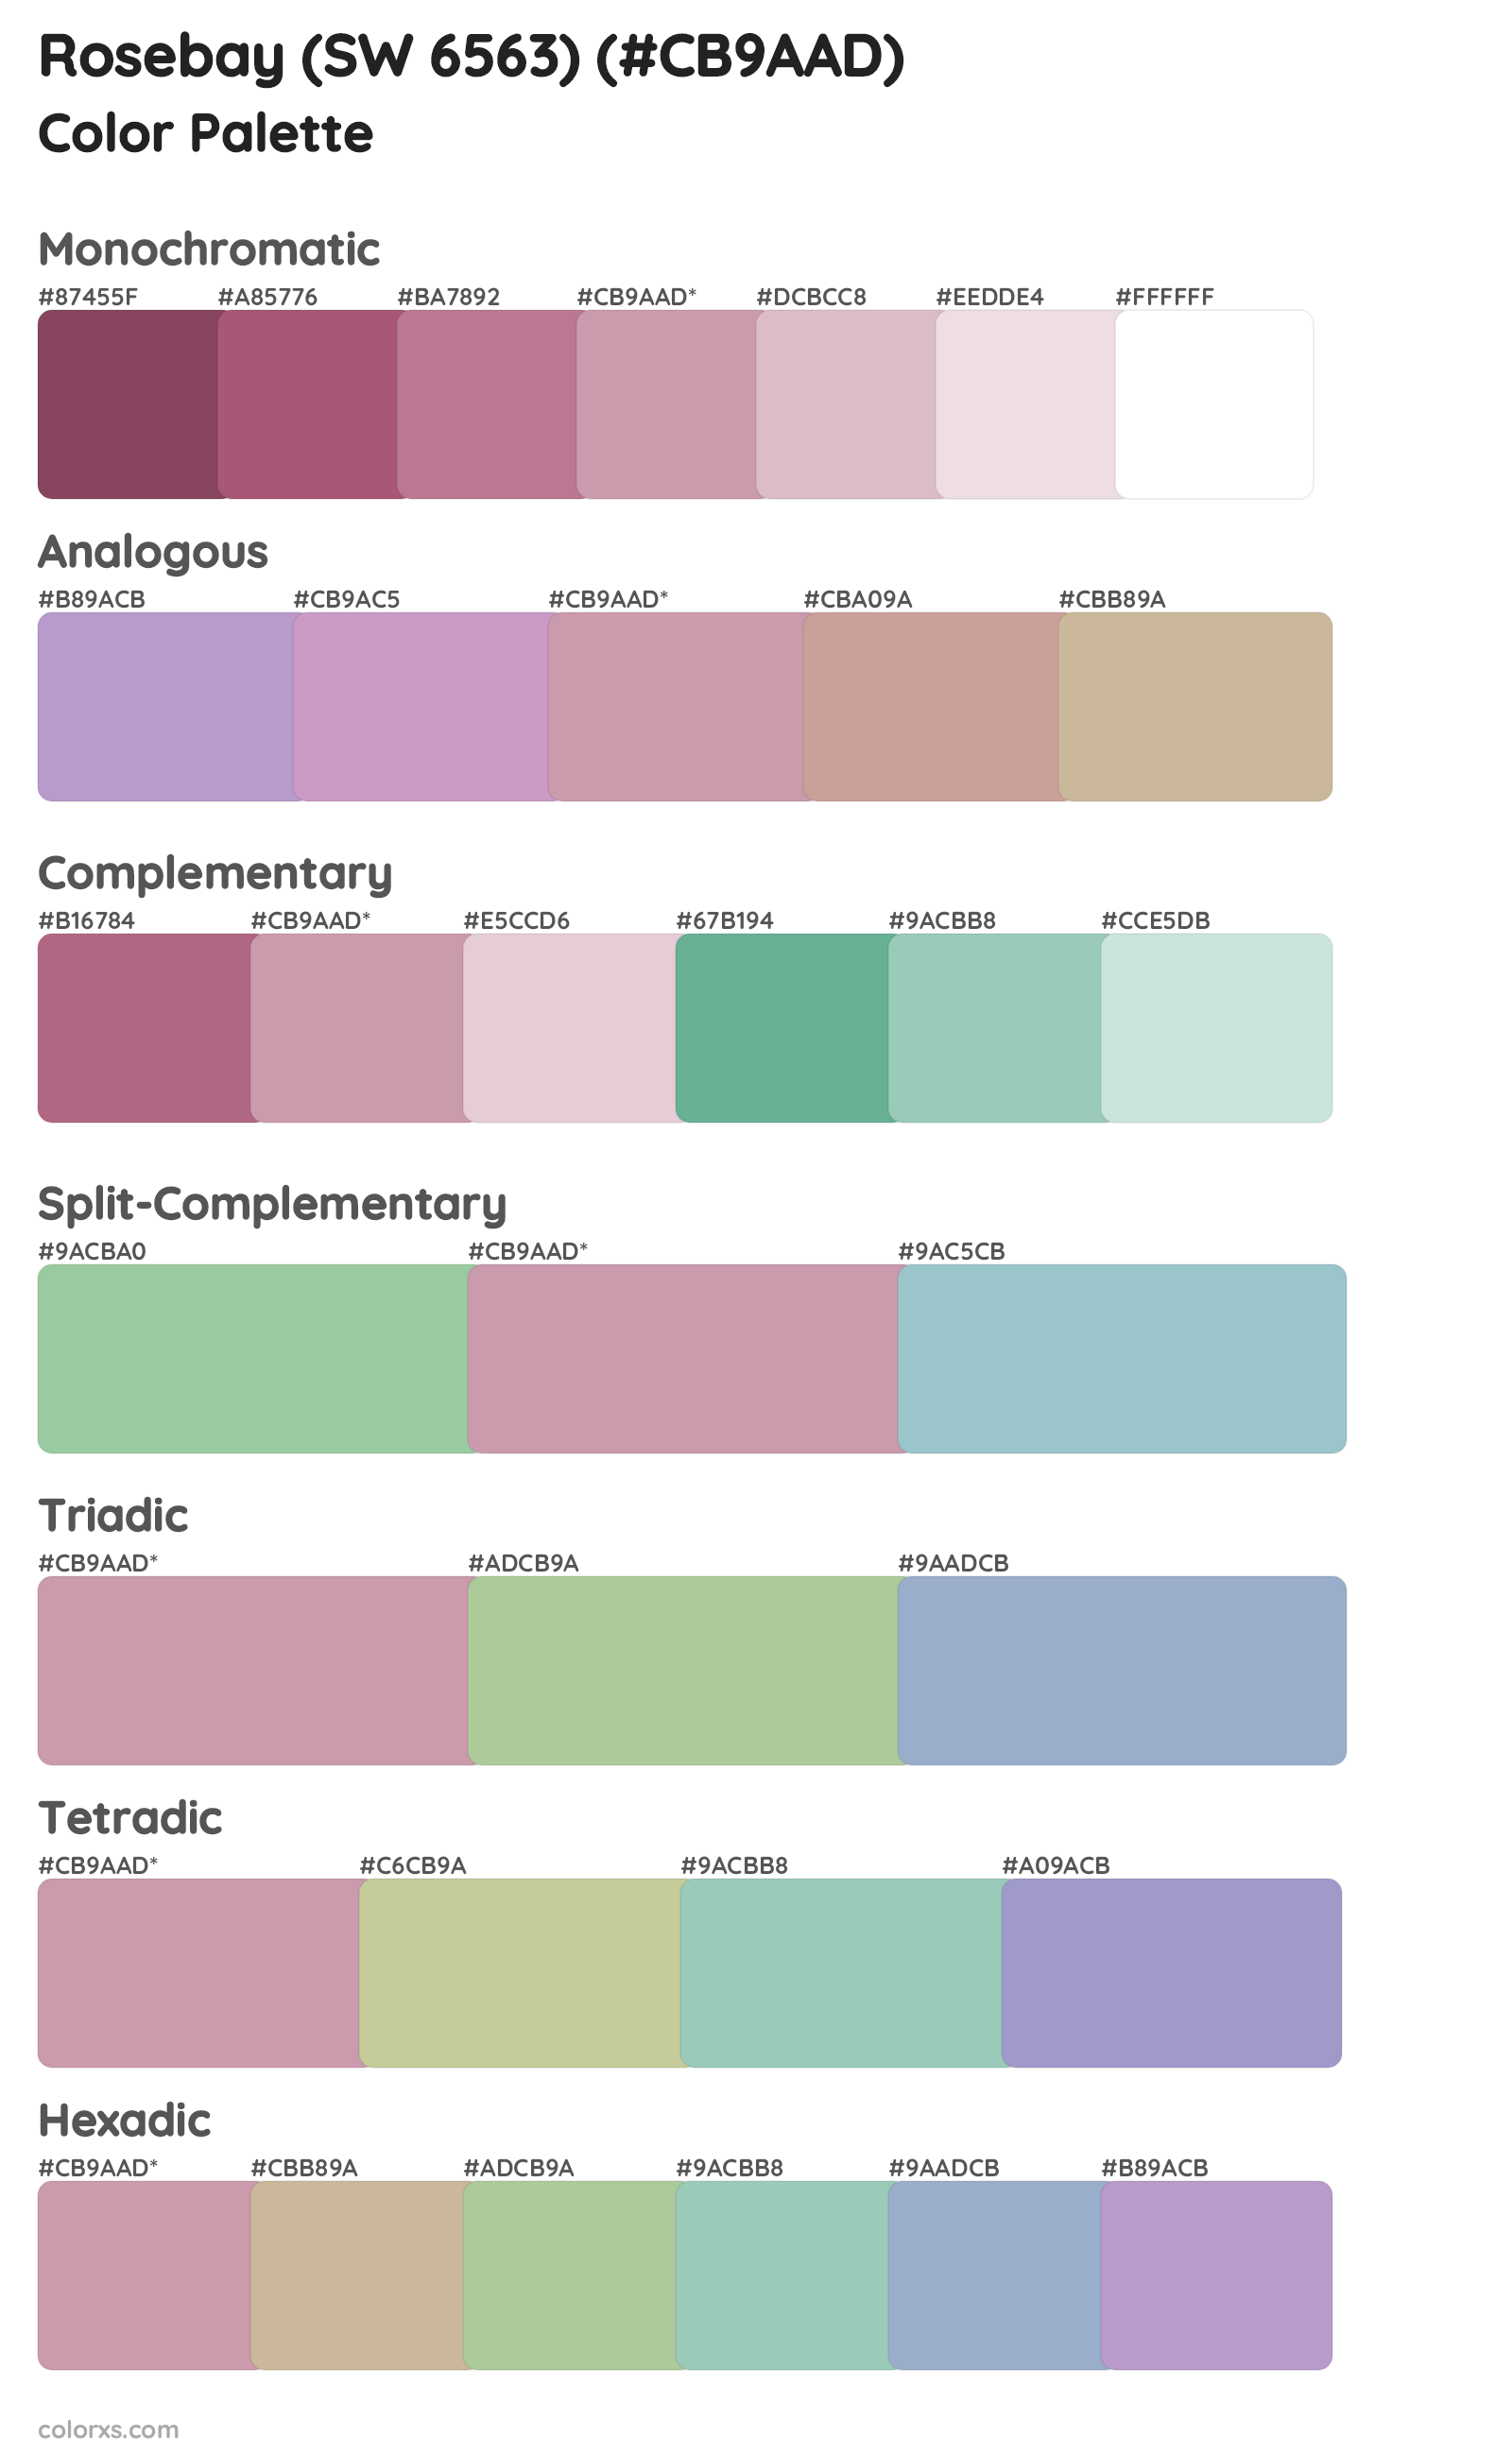 Rosebay (SW 6563) Color Scheme Palettes